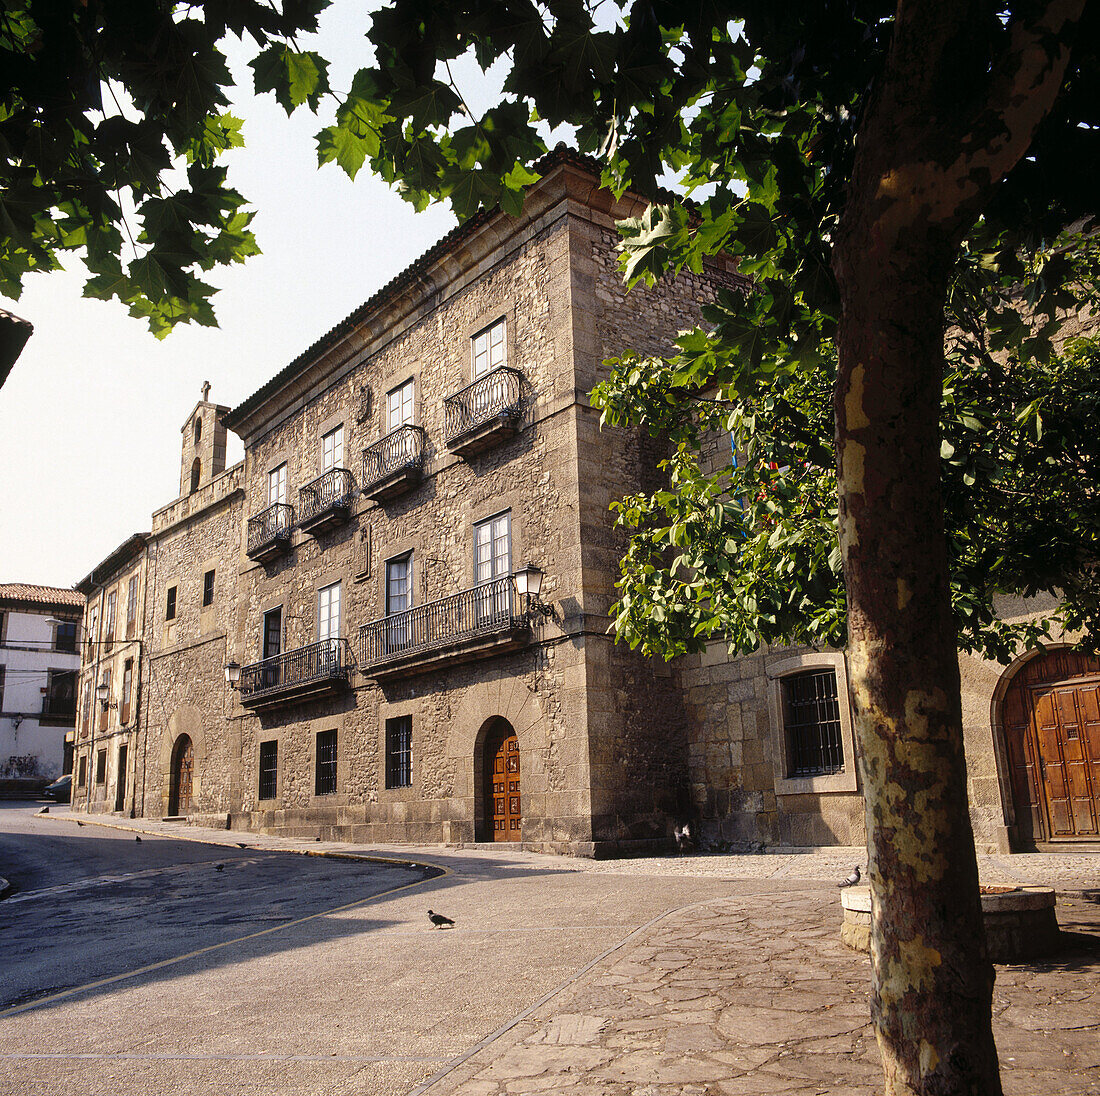 Jovellanos birth house and Capilla de los Remedios (chapel). Gijon, Asturias, Spain